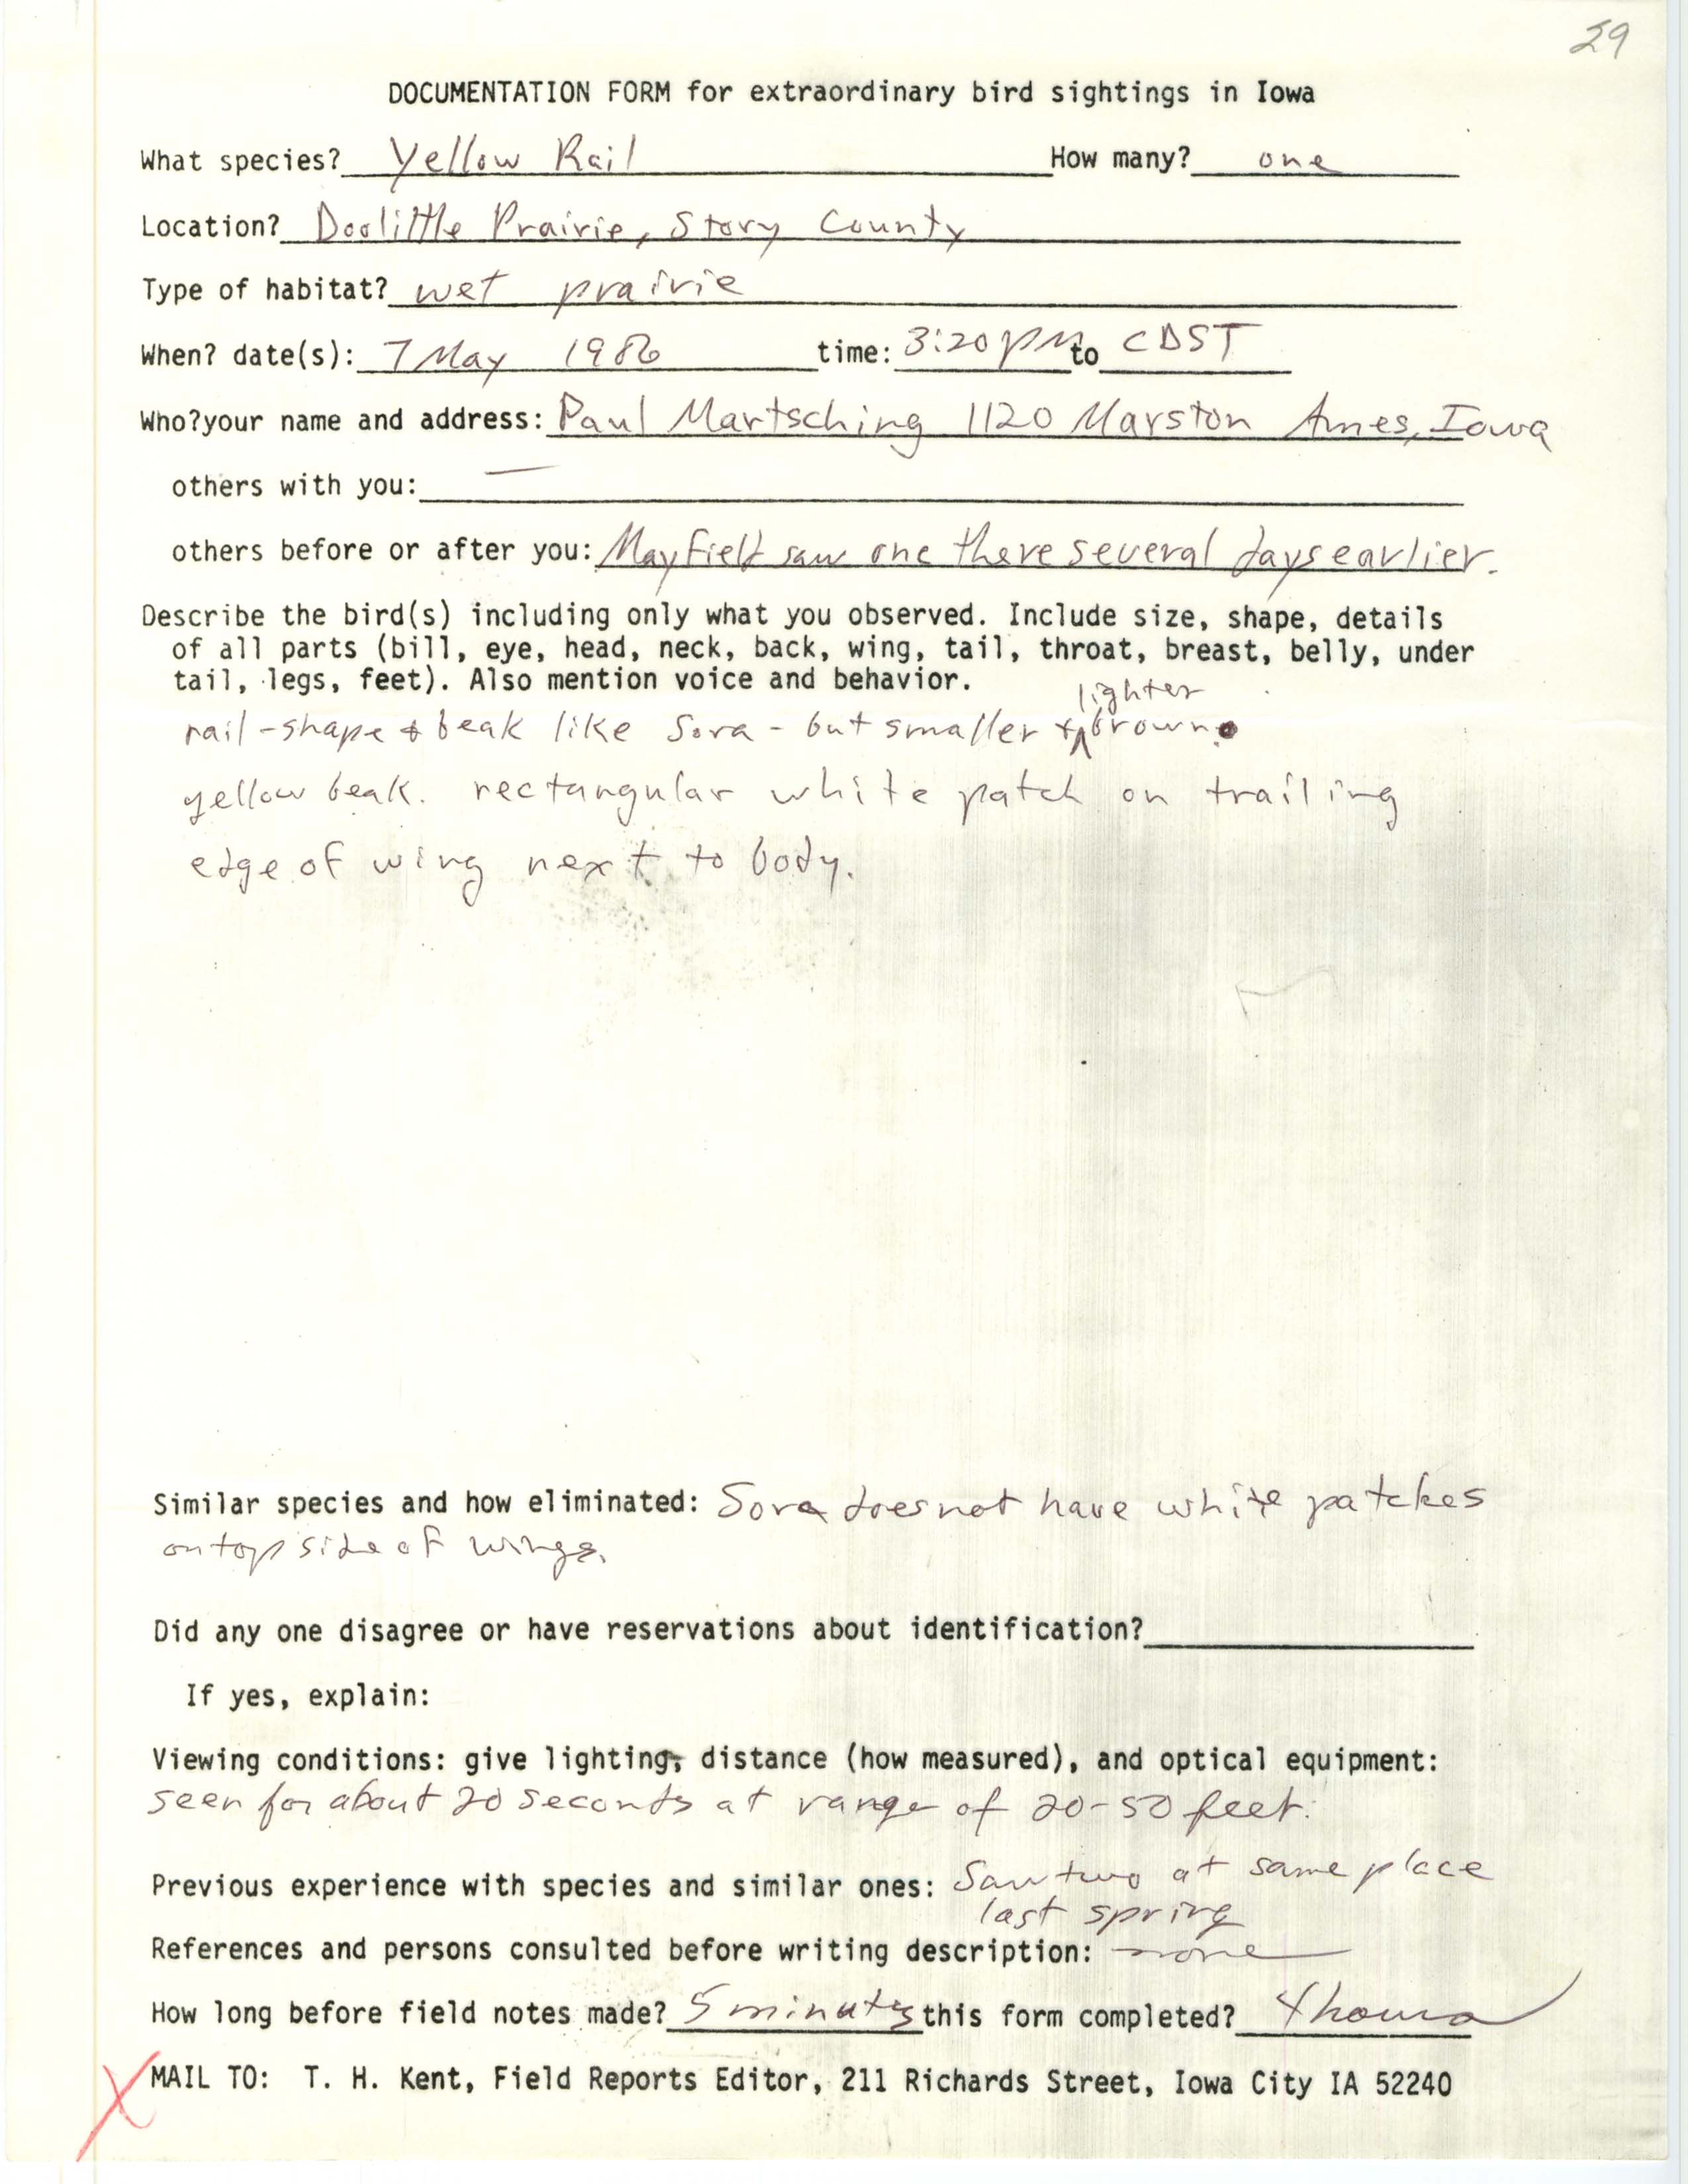 Rare bird documentation form for Yellow Rail at Doolittle Prairie, 1986